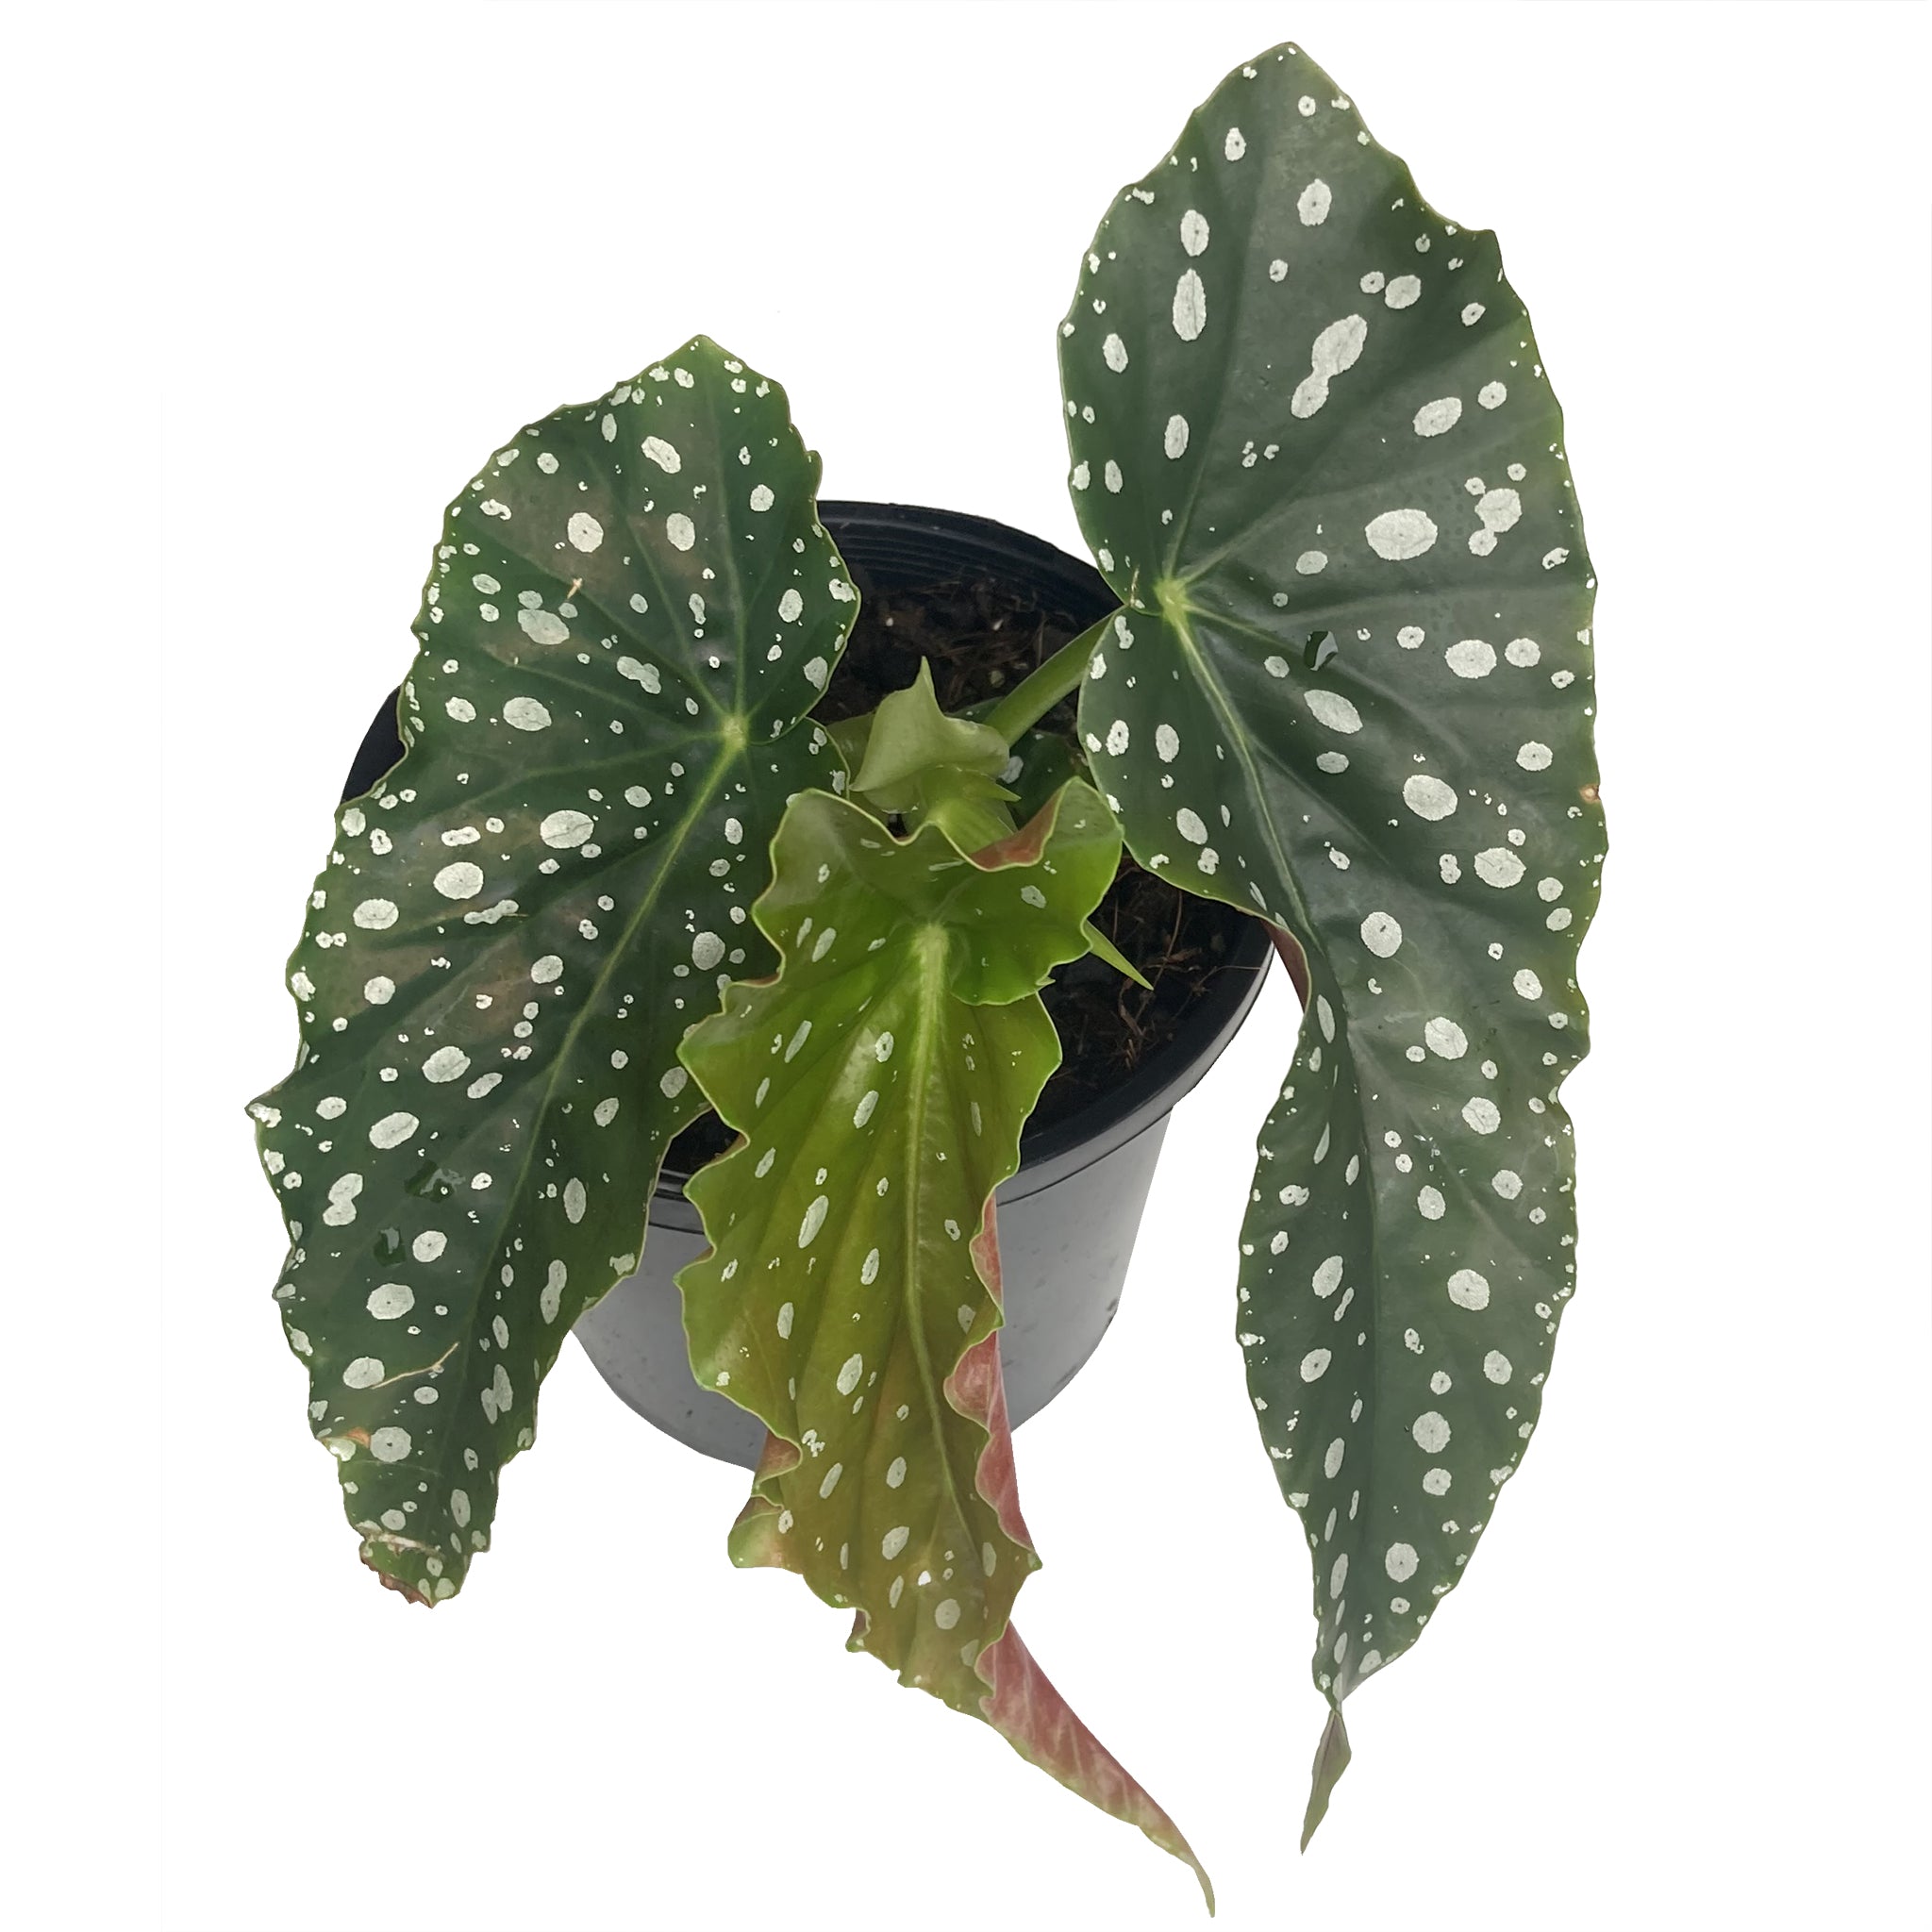 Begonia Maculata For Sale Online Australia – Fern Farm Plants